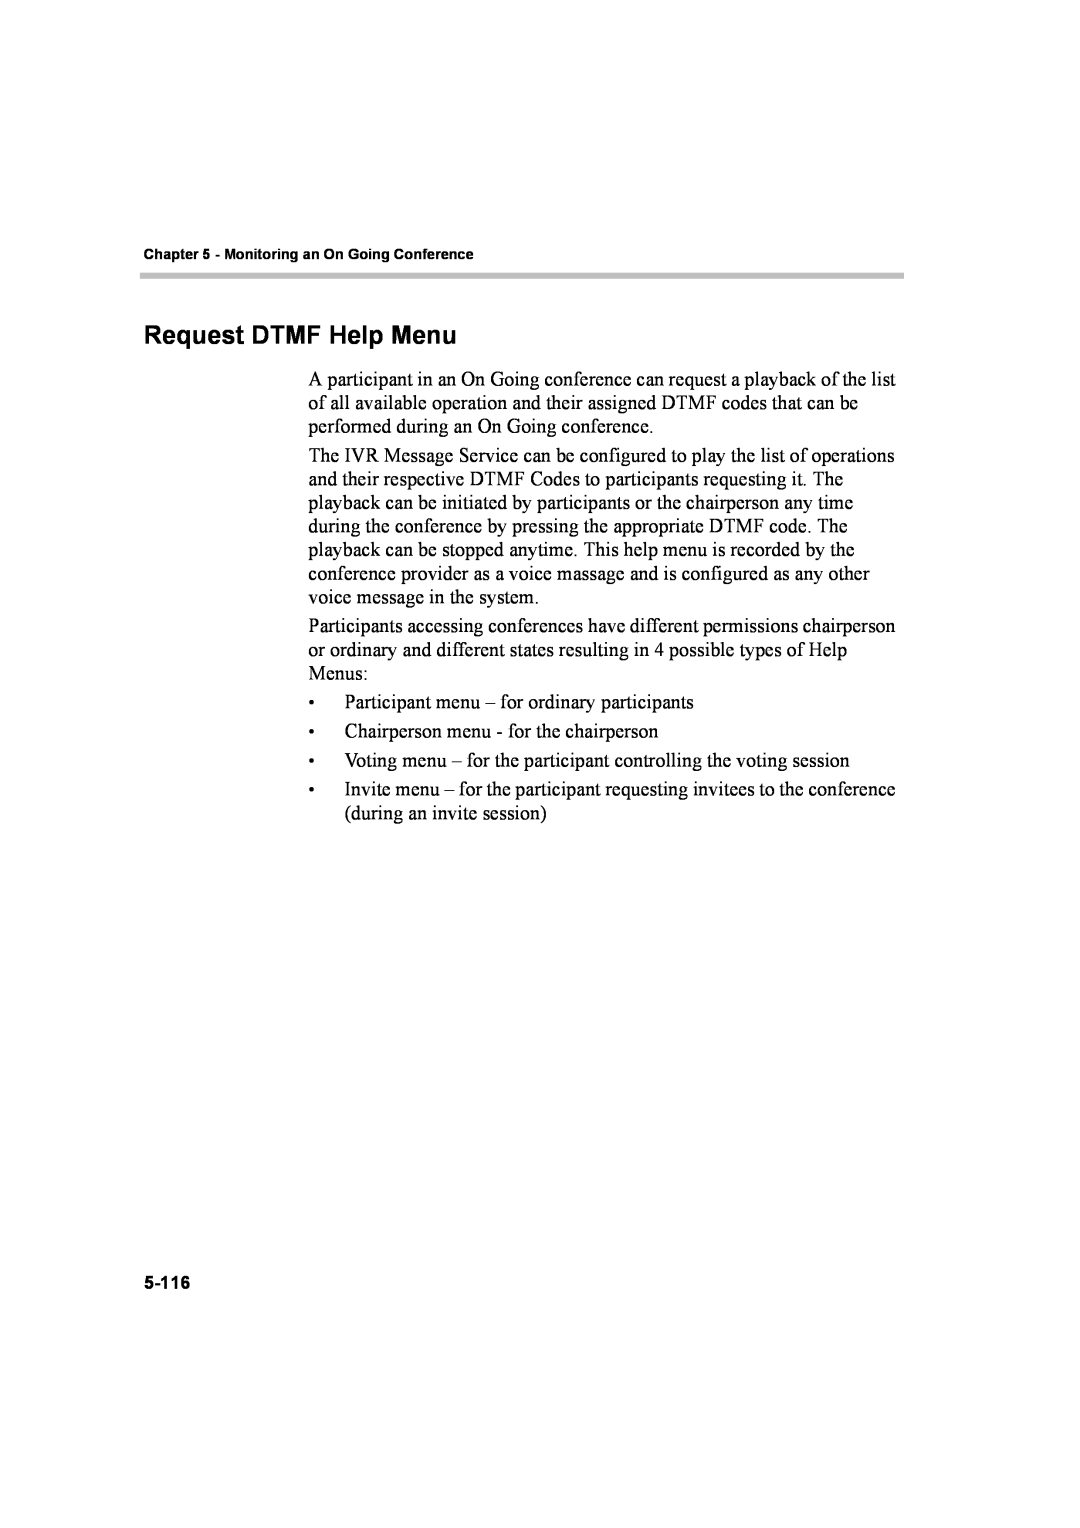 Polycom 8 manual Request DTMF Help Menu 